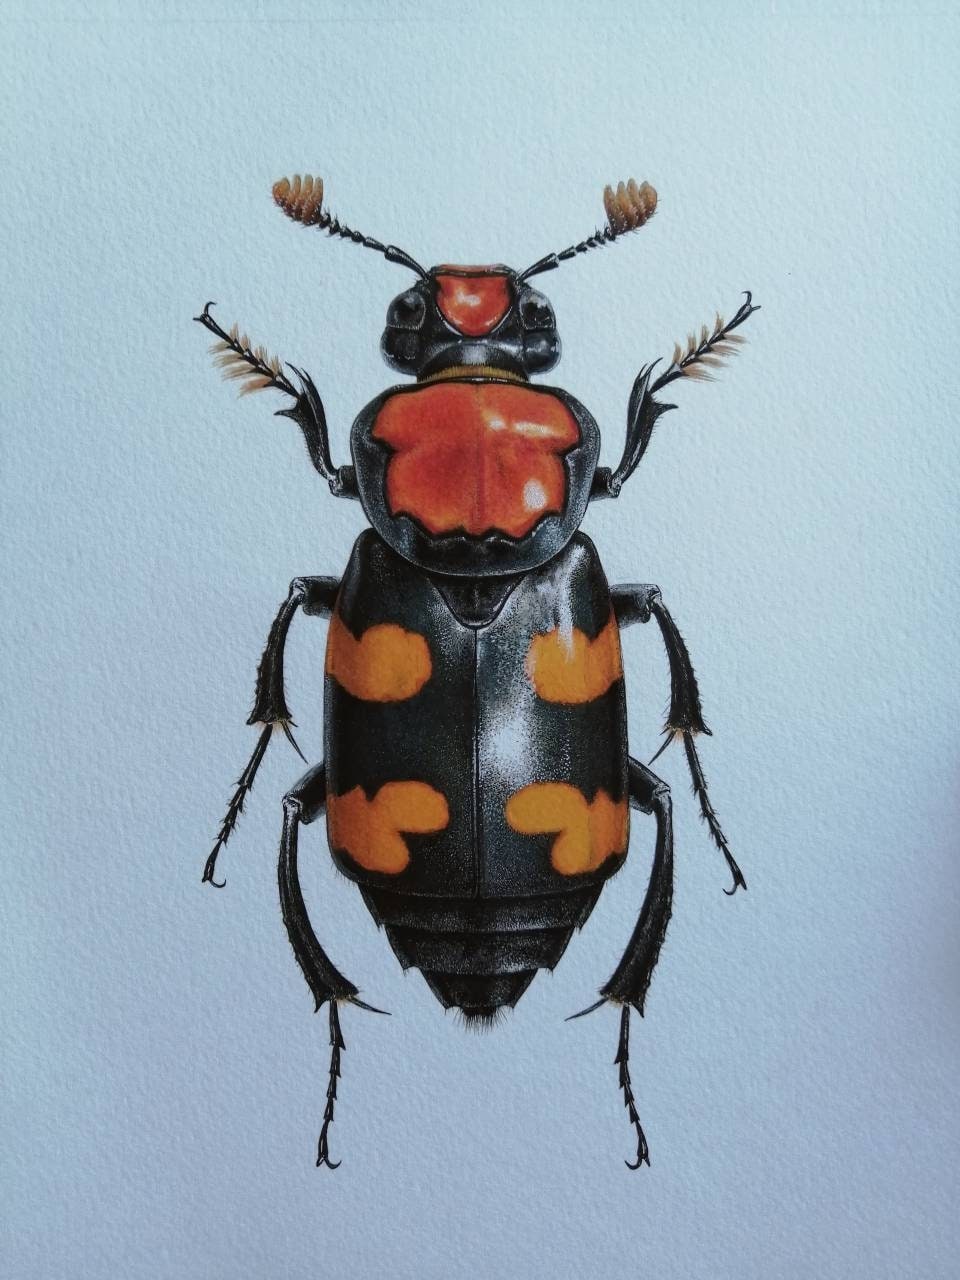 Nicrophorus americanus, American Burying Beetle, limited edition art print A4 size